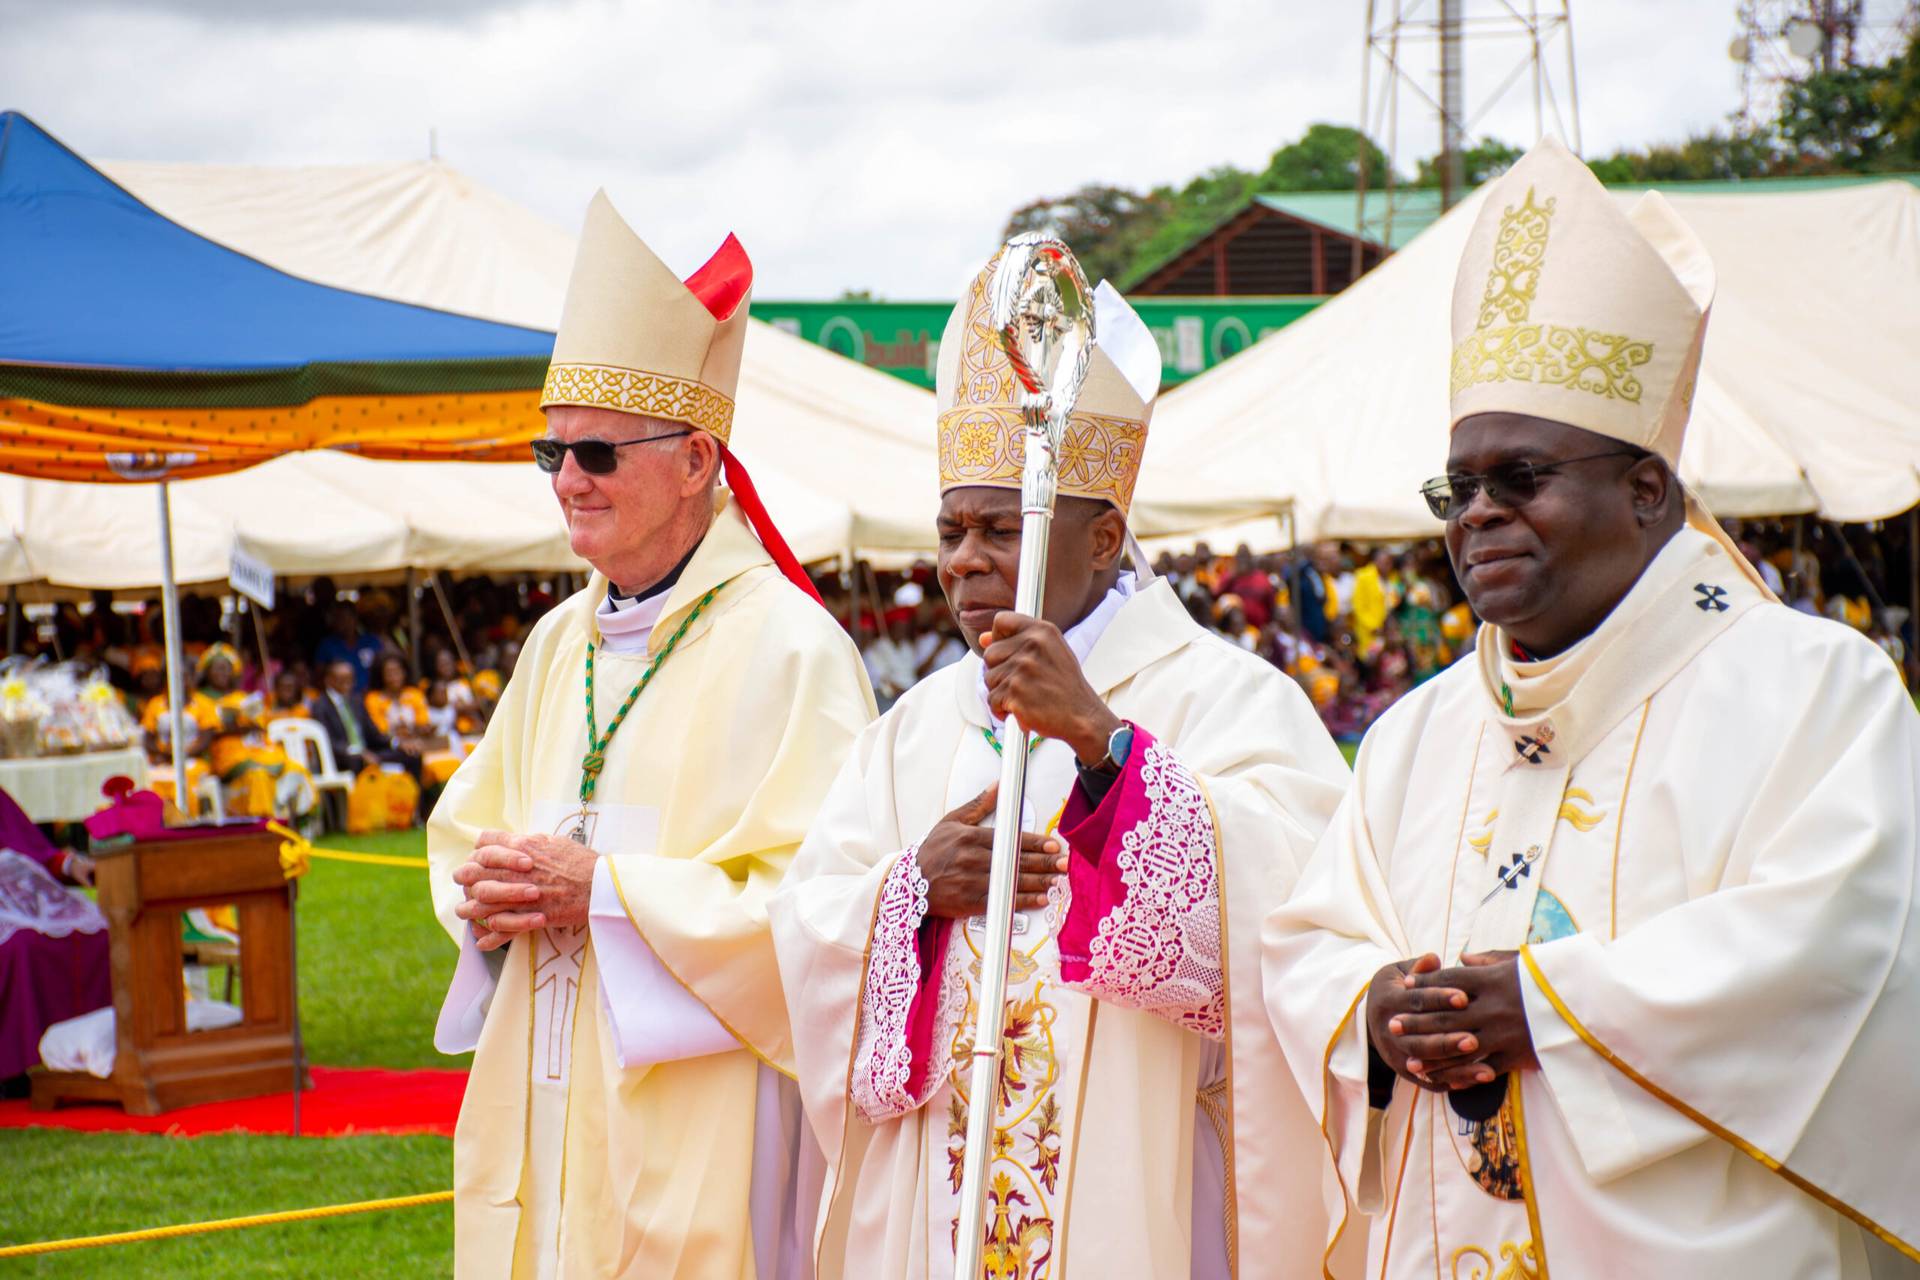 Archbishop George Desmond Tambala celebrates Mass in Lilongwe, Malawi. (Credit: Archdiocese of Lilongwe.)